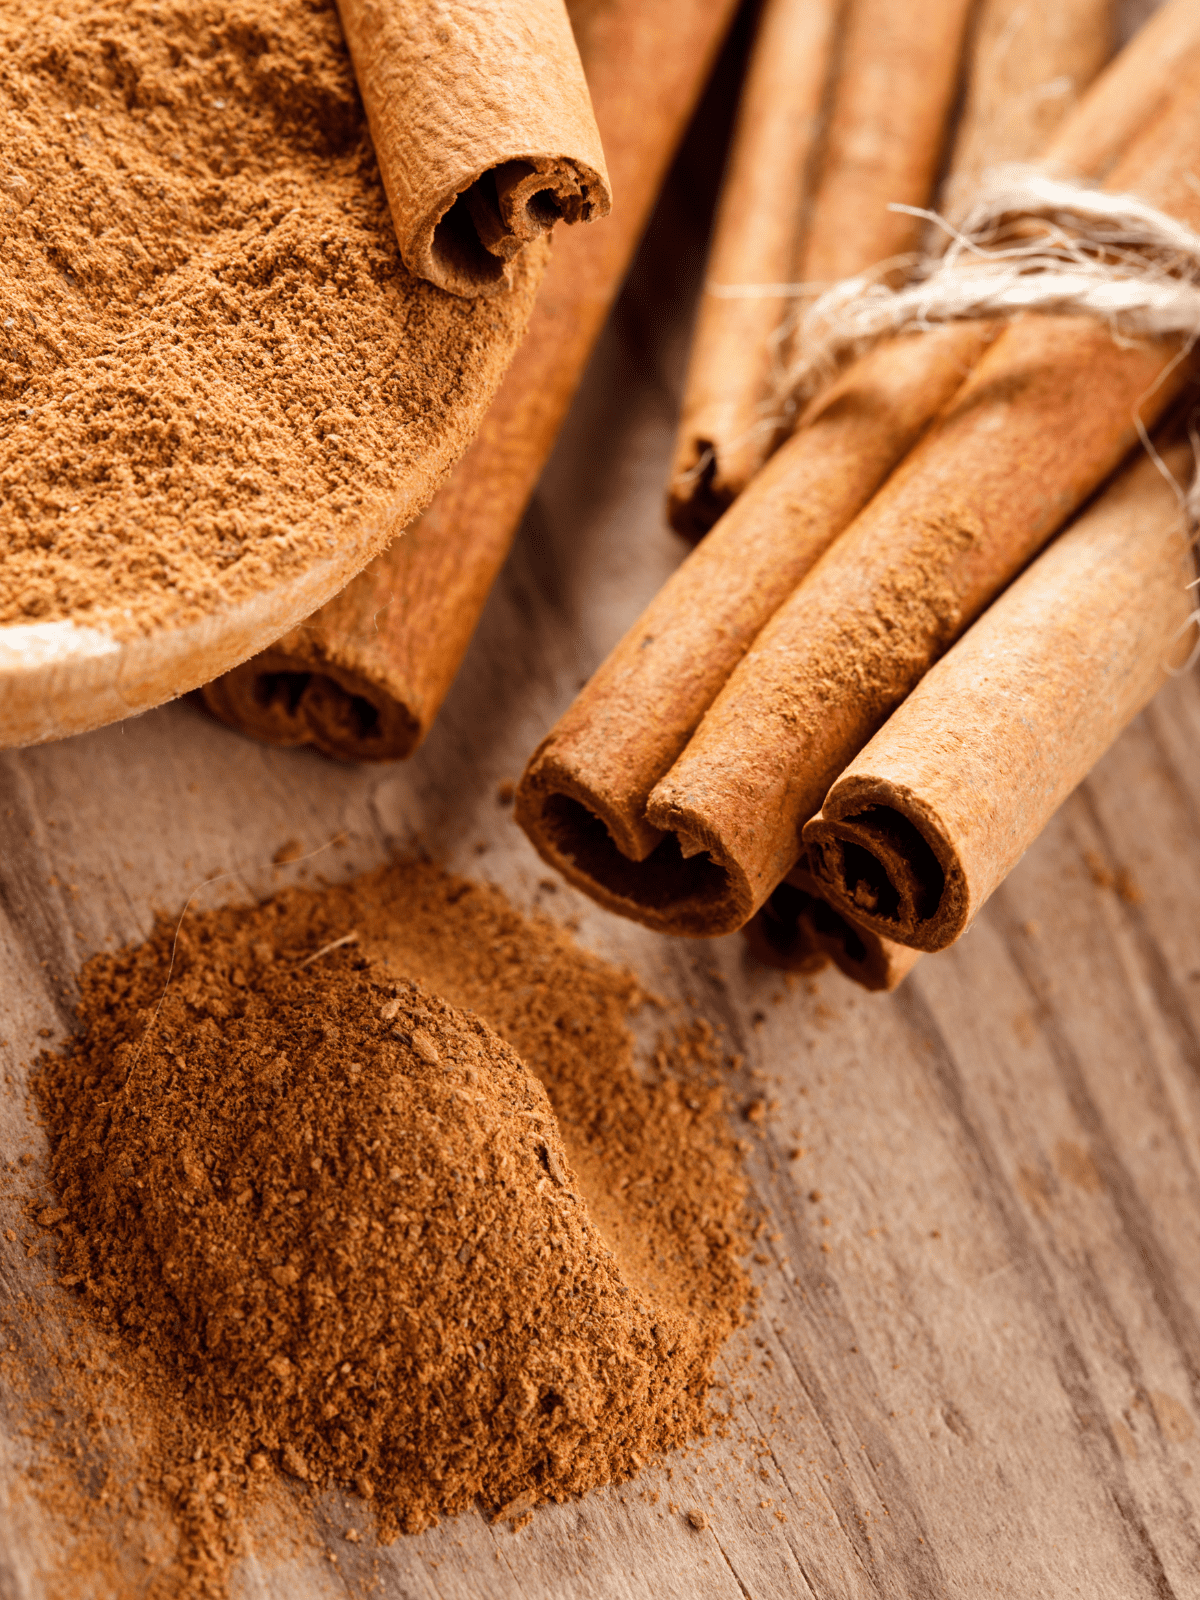 Cinnamon sticks and ground spice.